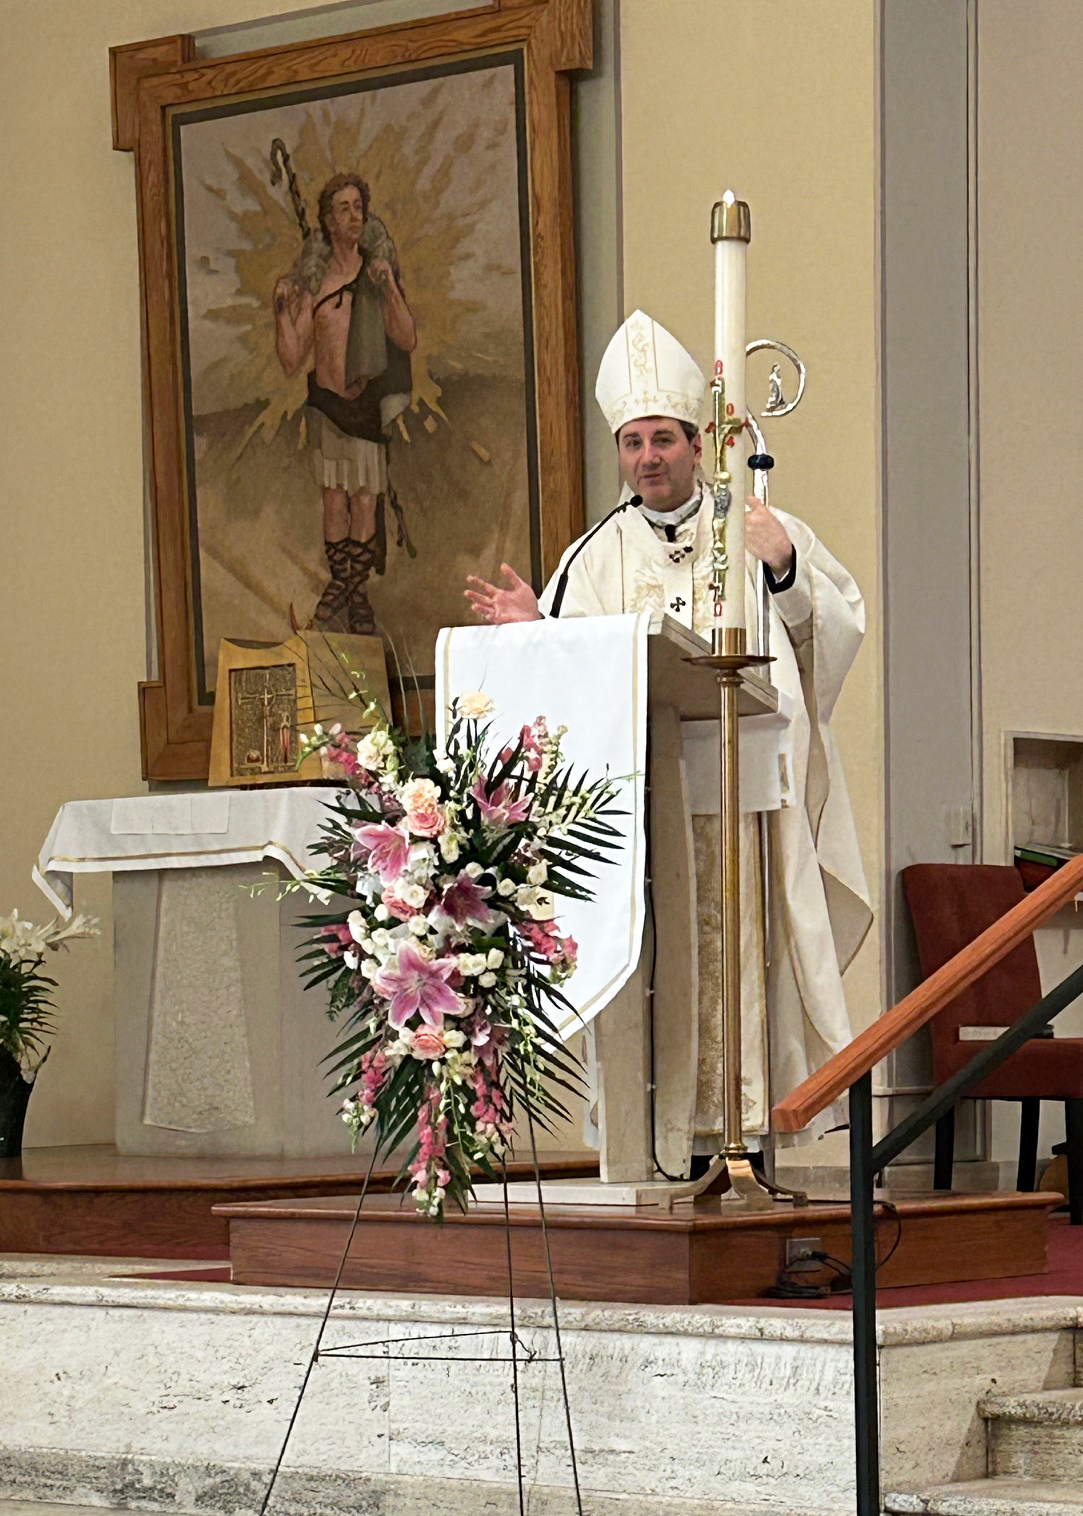 Archbishop Leo visits St. Peter's Parish